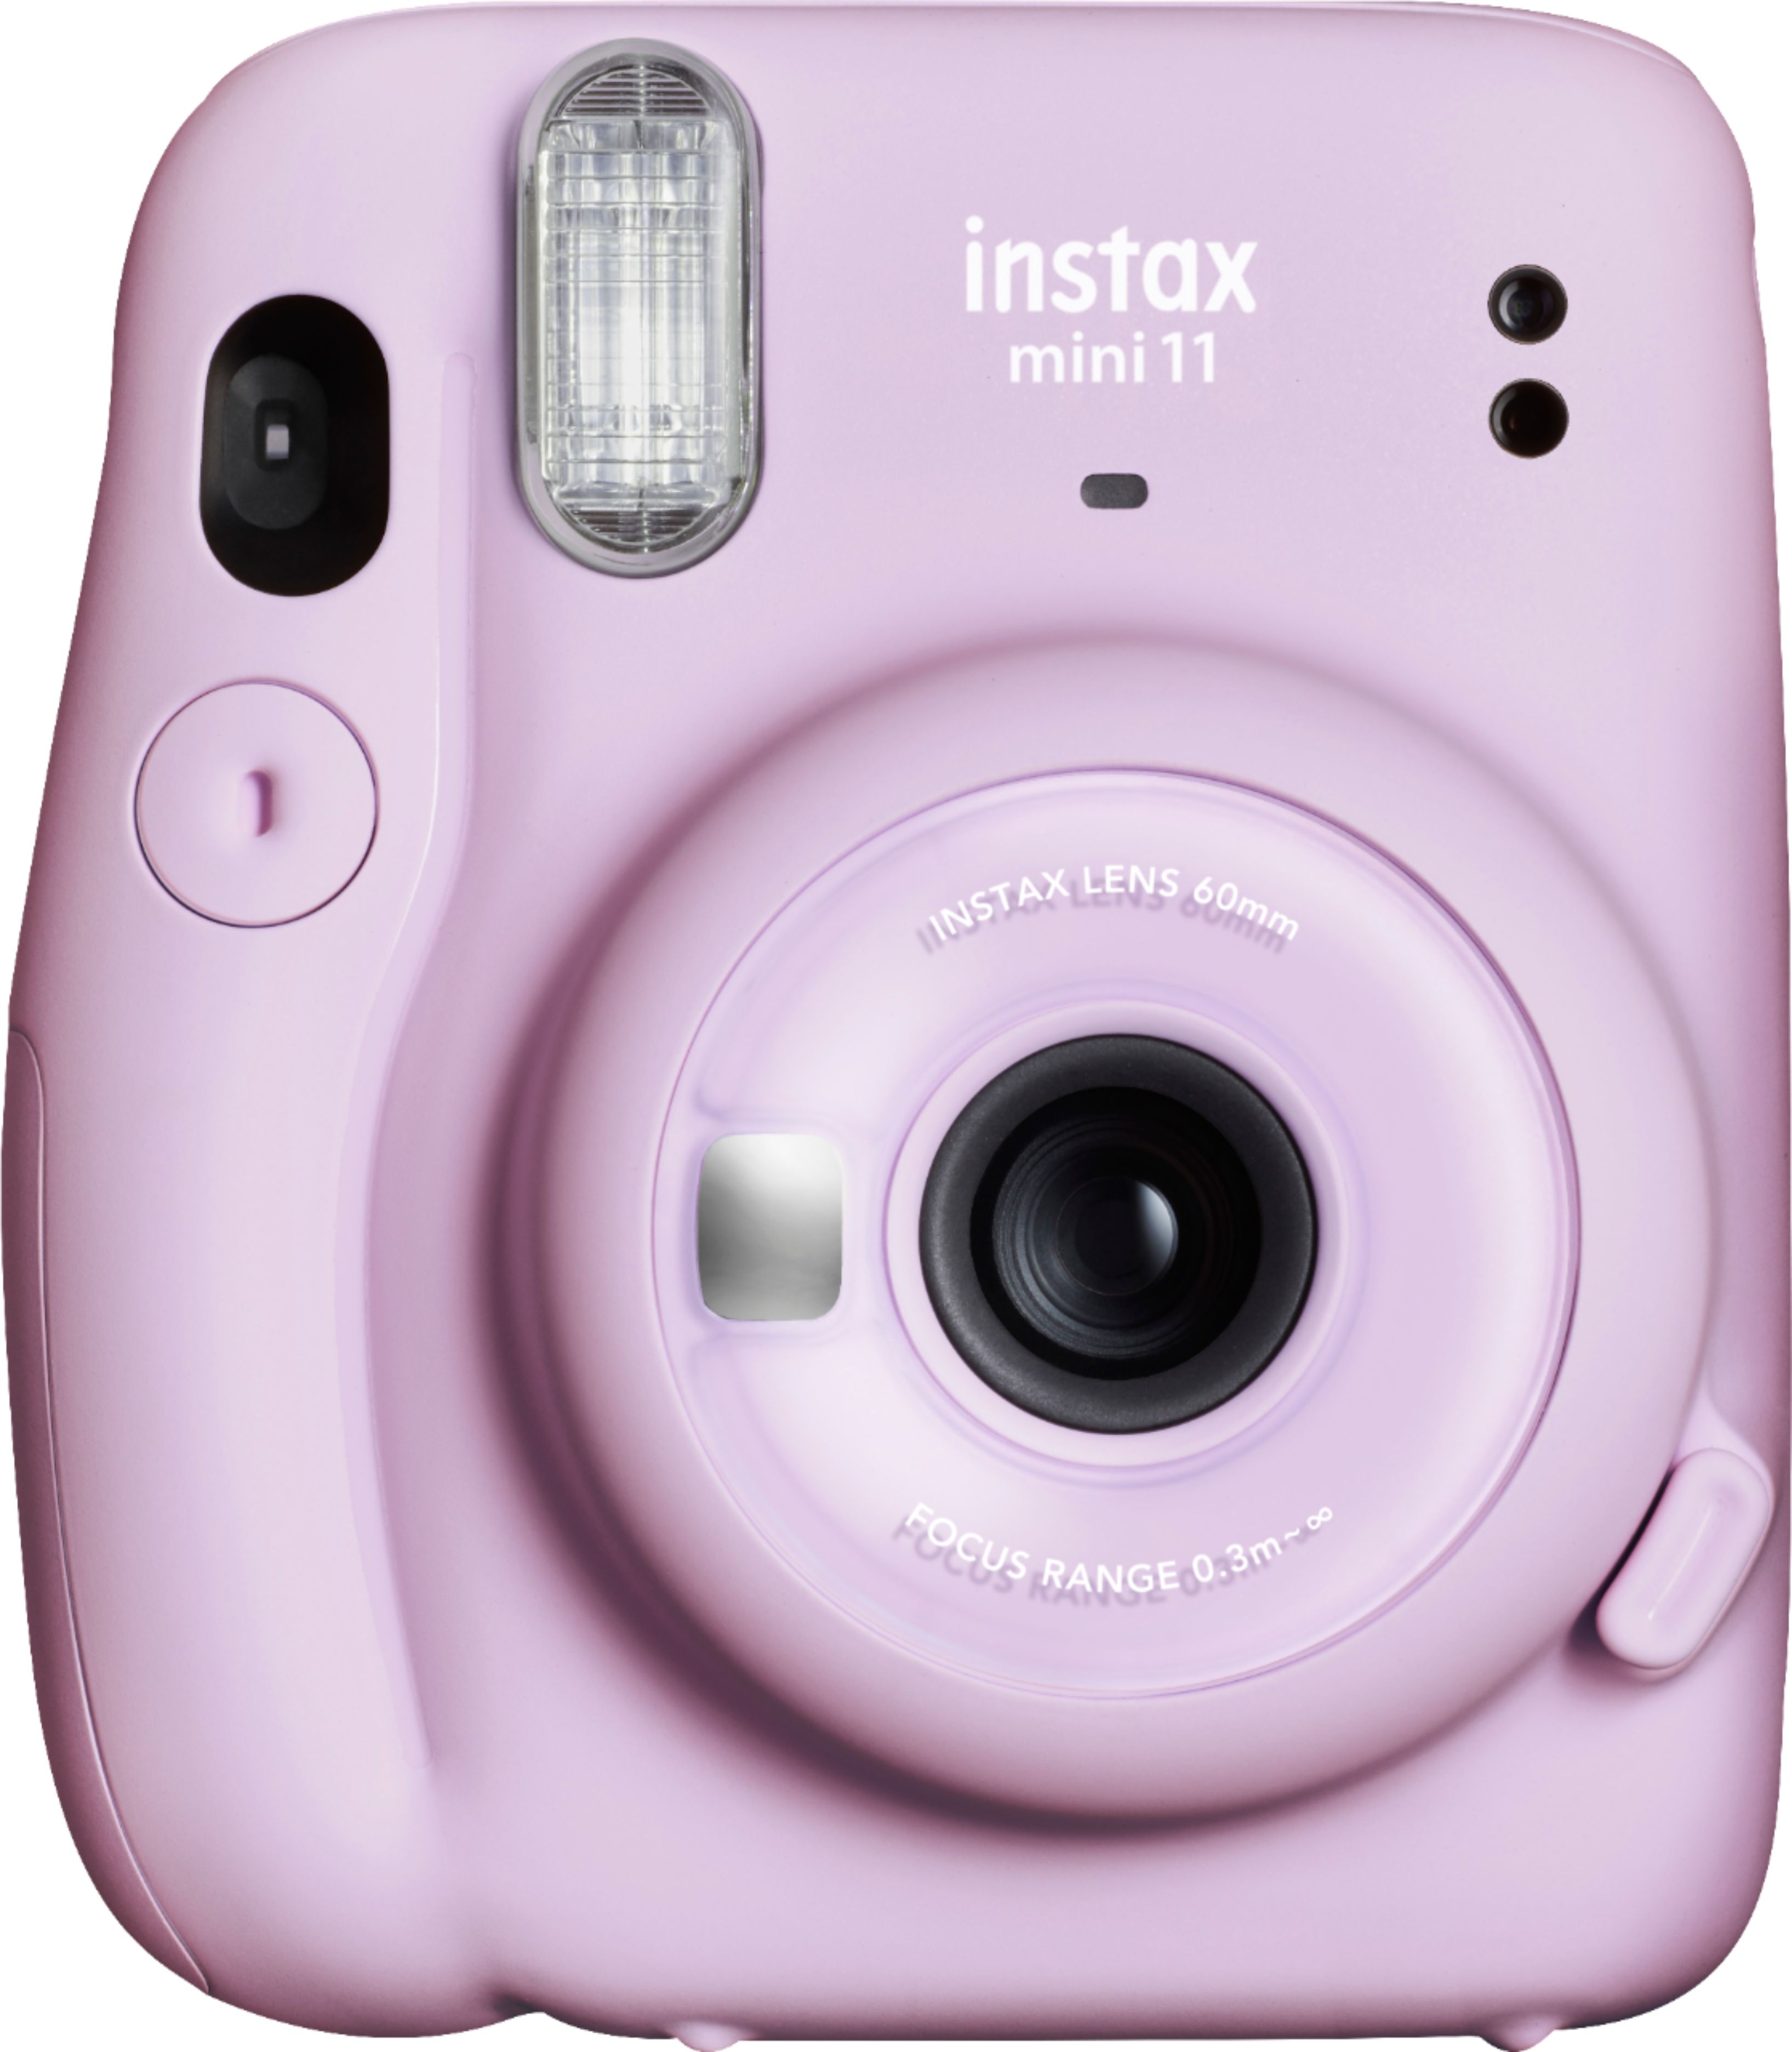 vertrekken Nathaniel Ward Nauwgezet Fujifilm instax mini 11 Instant Film Camera Lilac Purple 16654803 - Best Buy